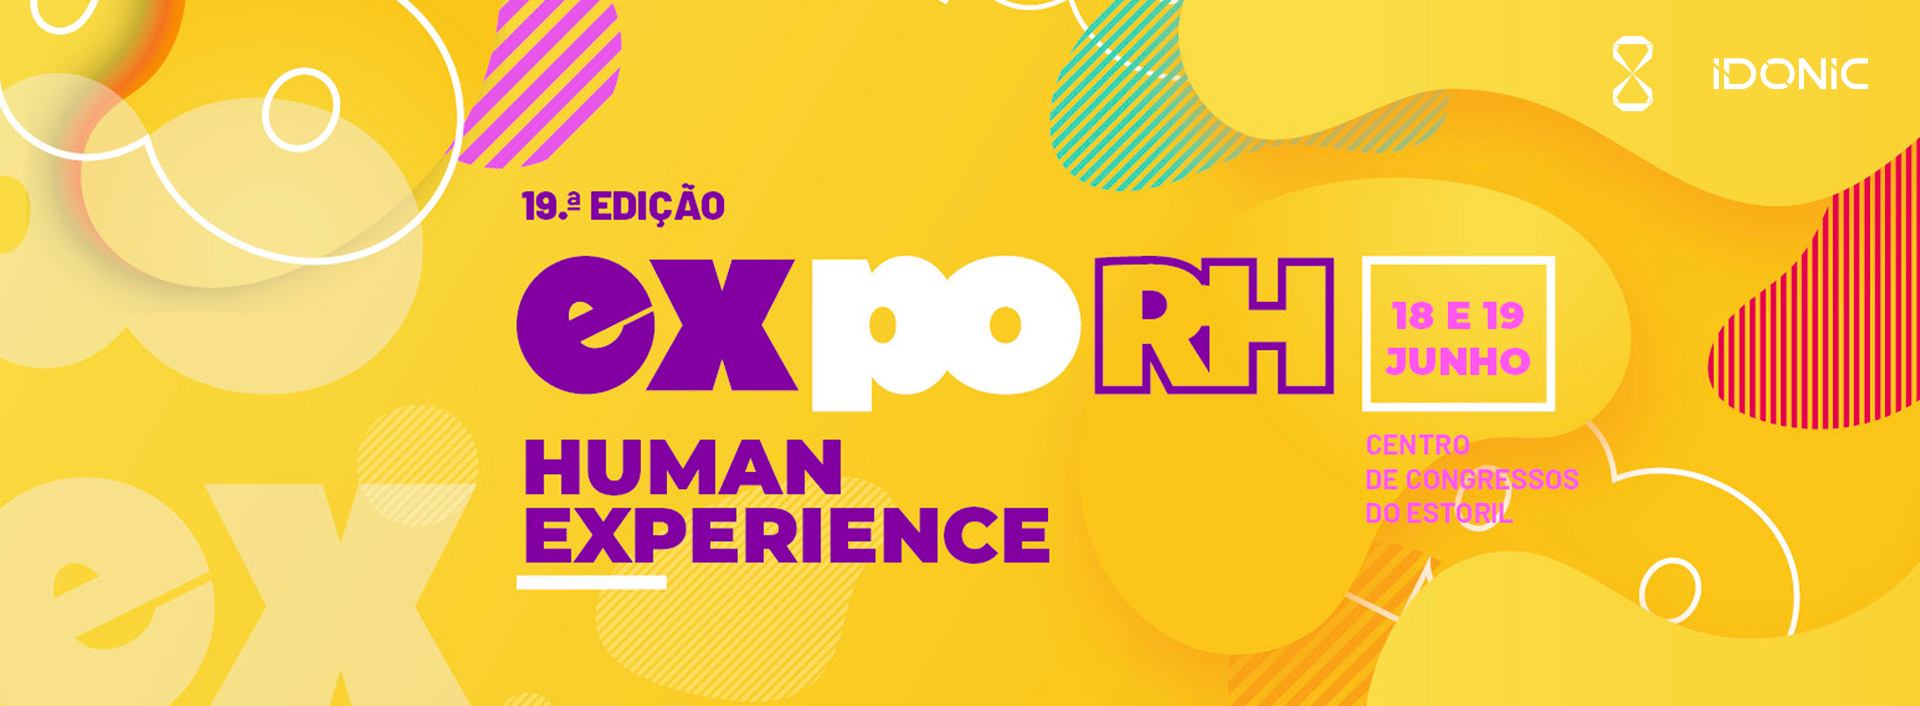 expo-rh-2020-idonic